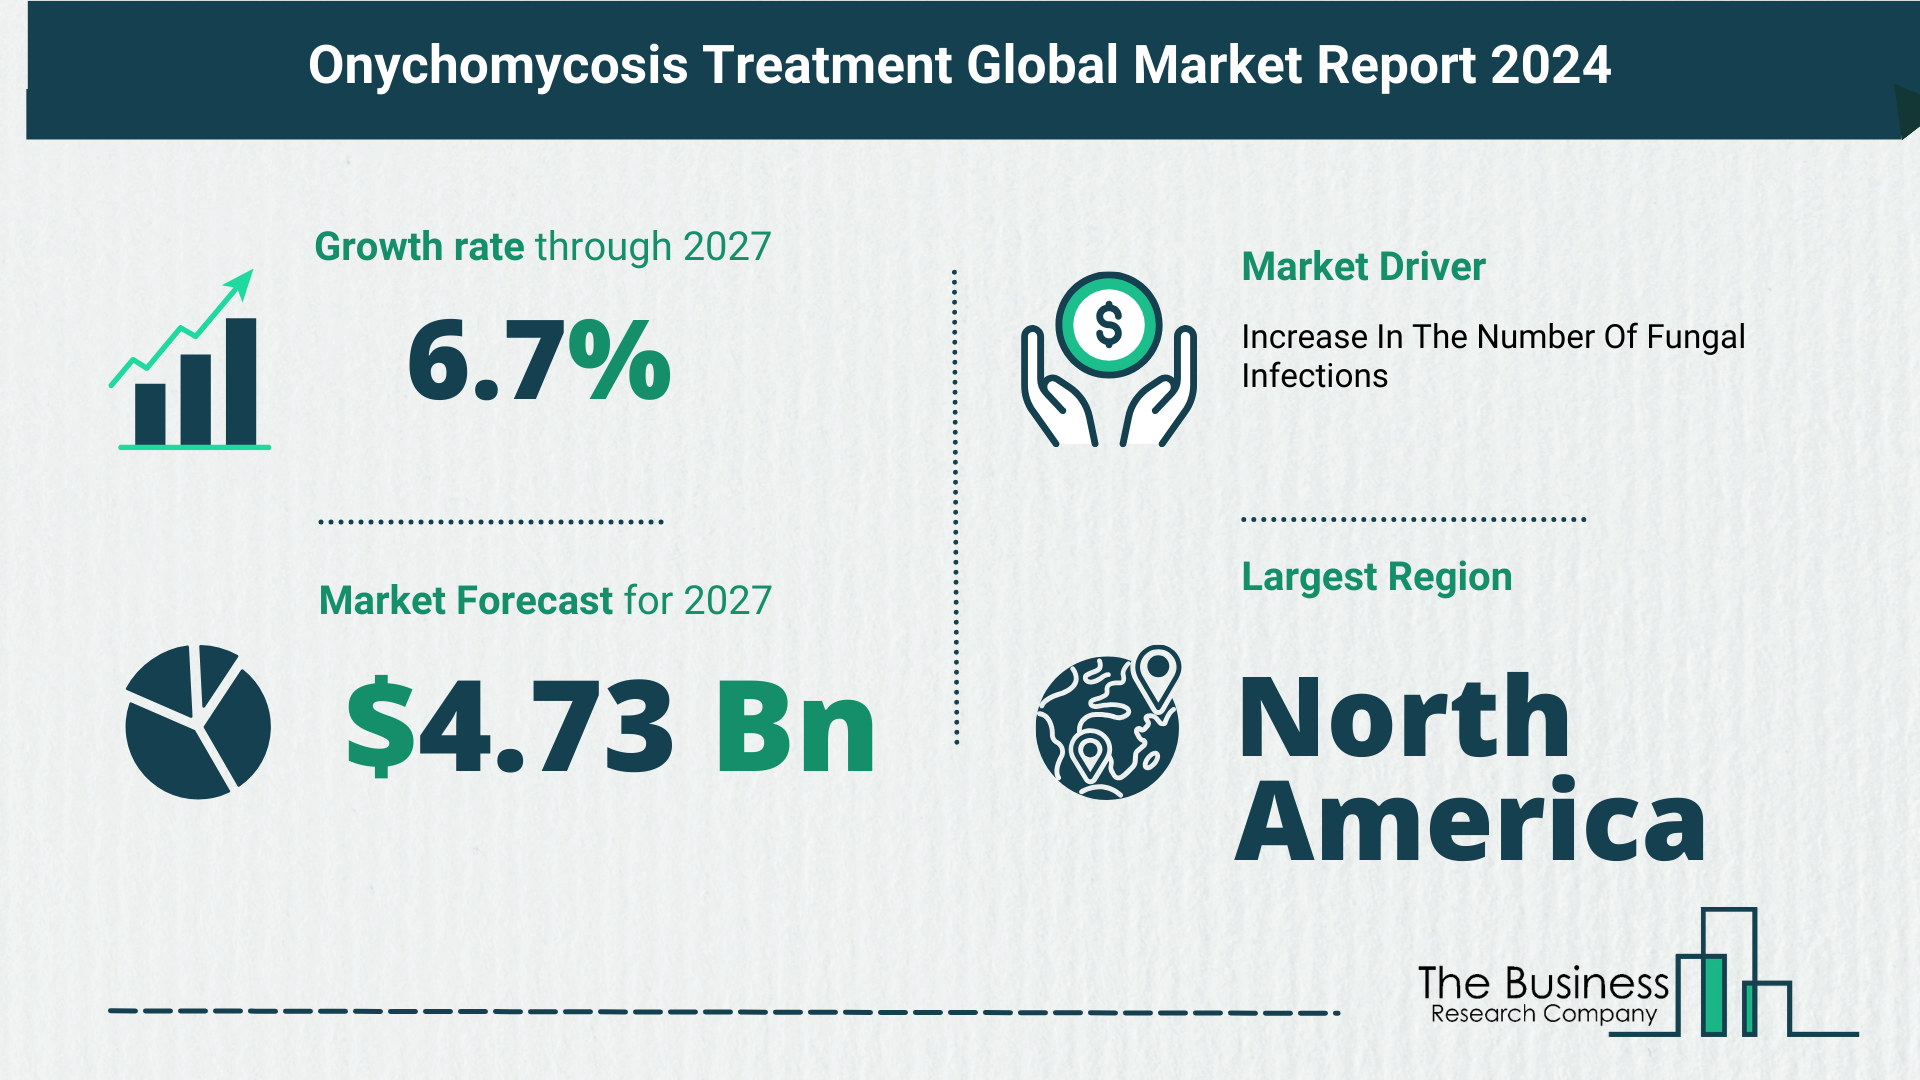 Global Onychomycosis Treatment Market